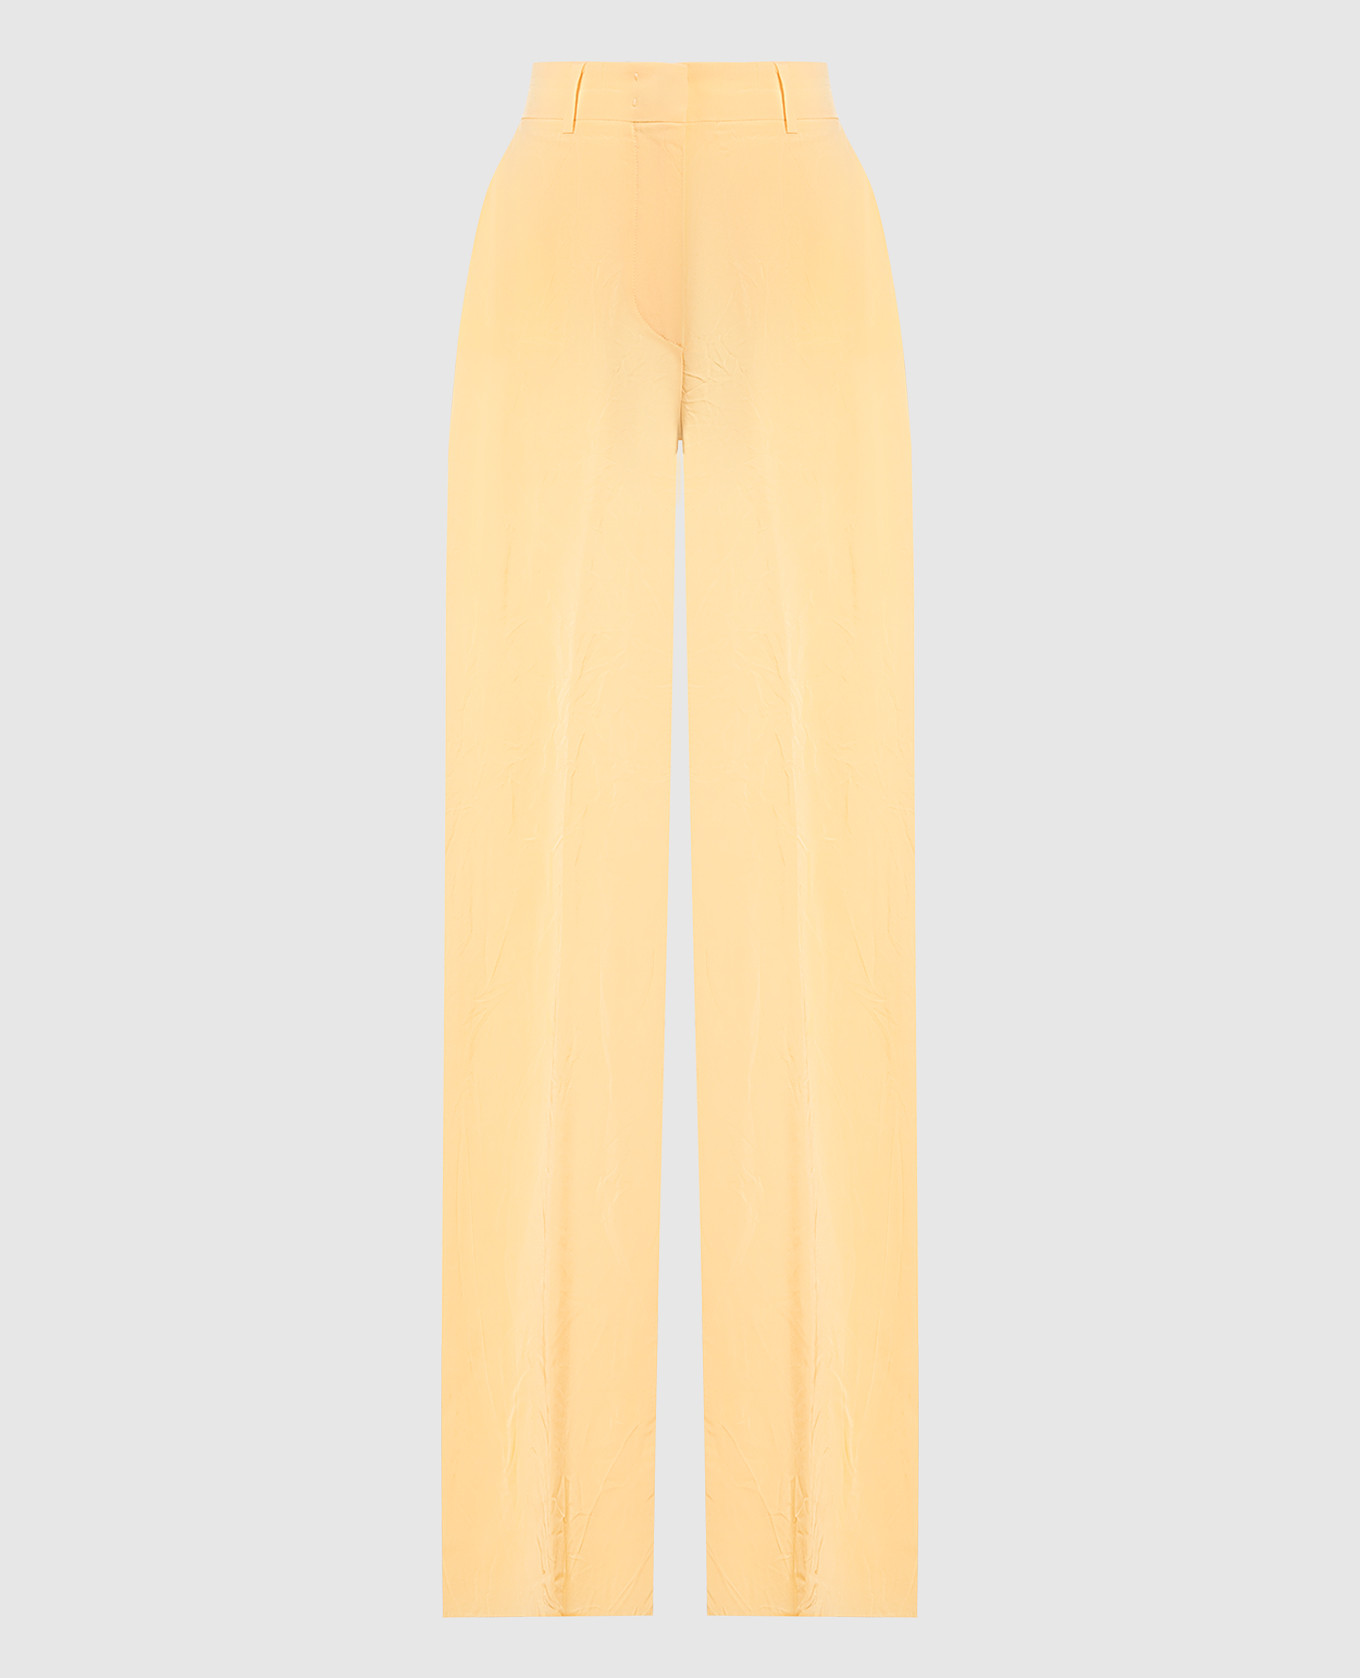 Persia yellow flared pants